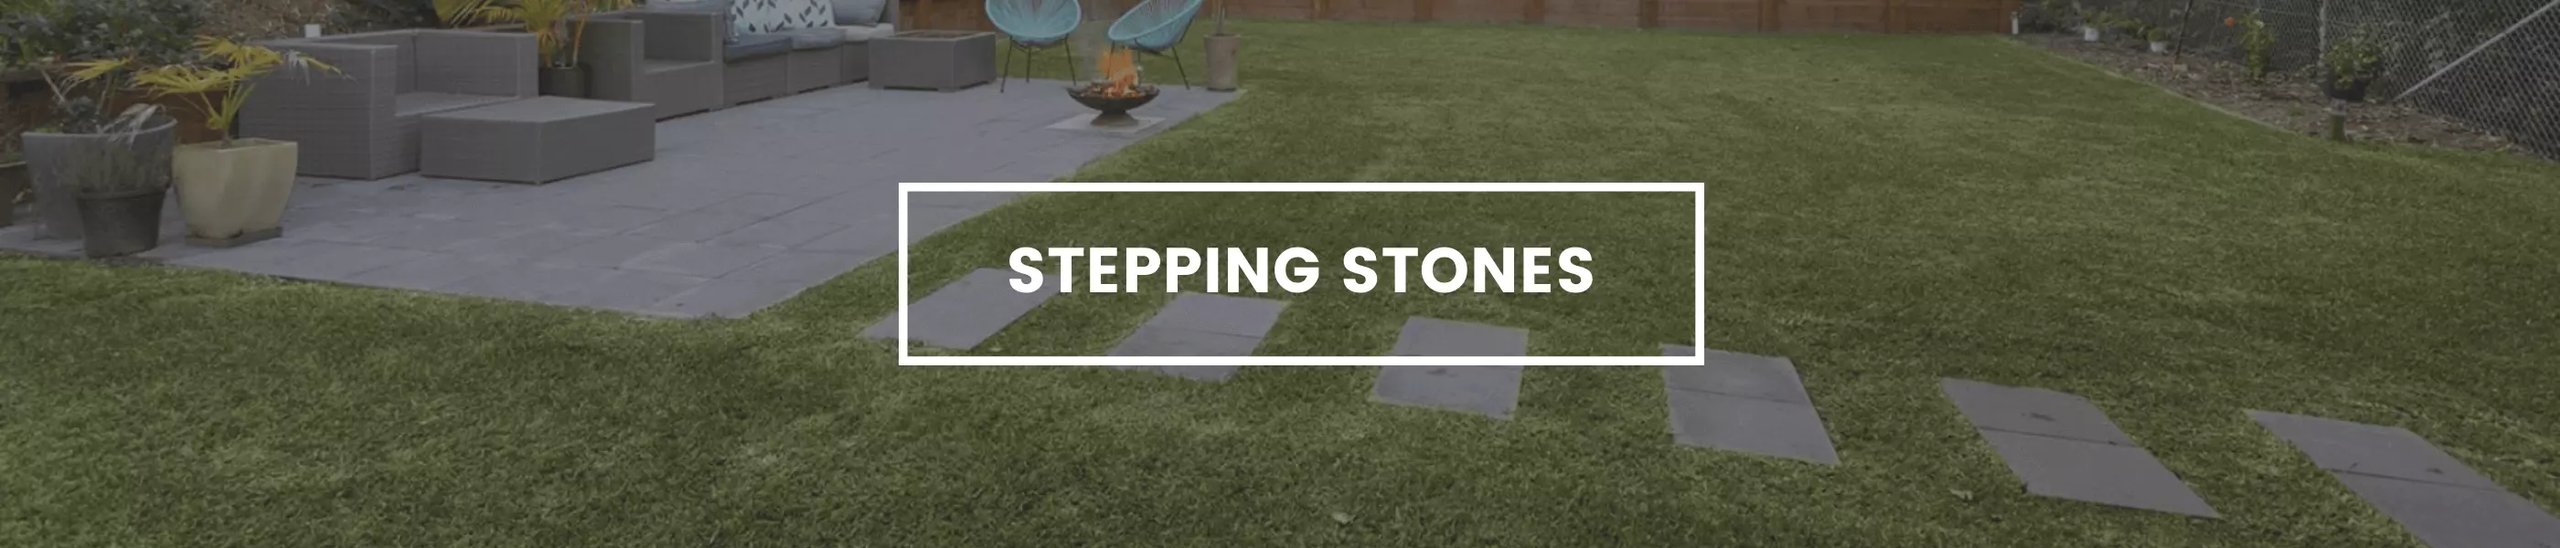 Stepping stones banner for desktop.